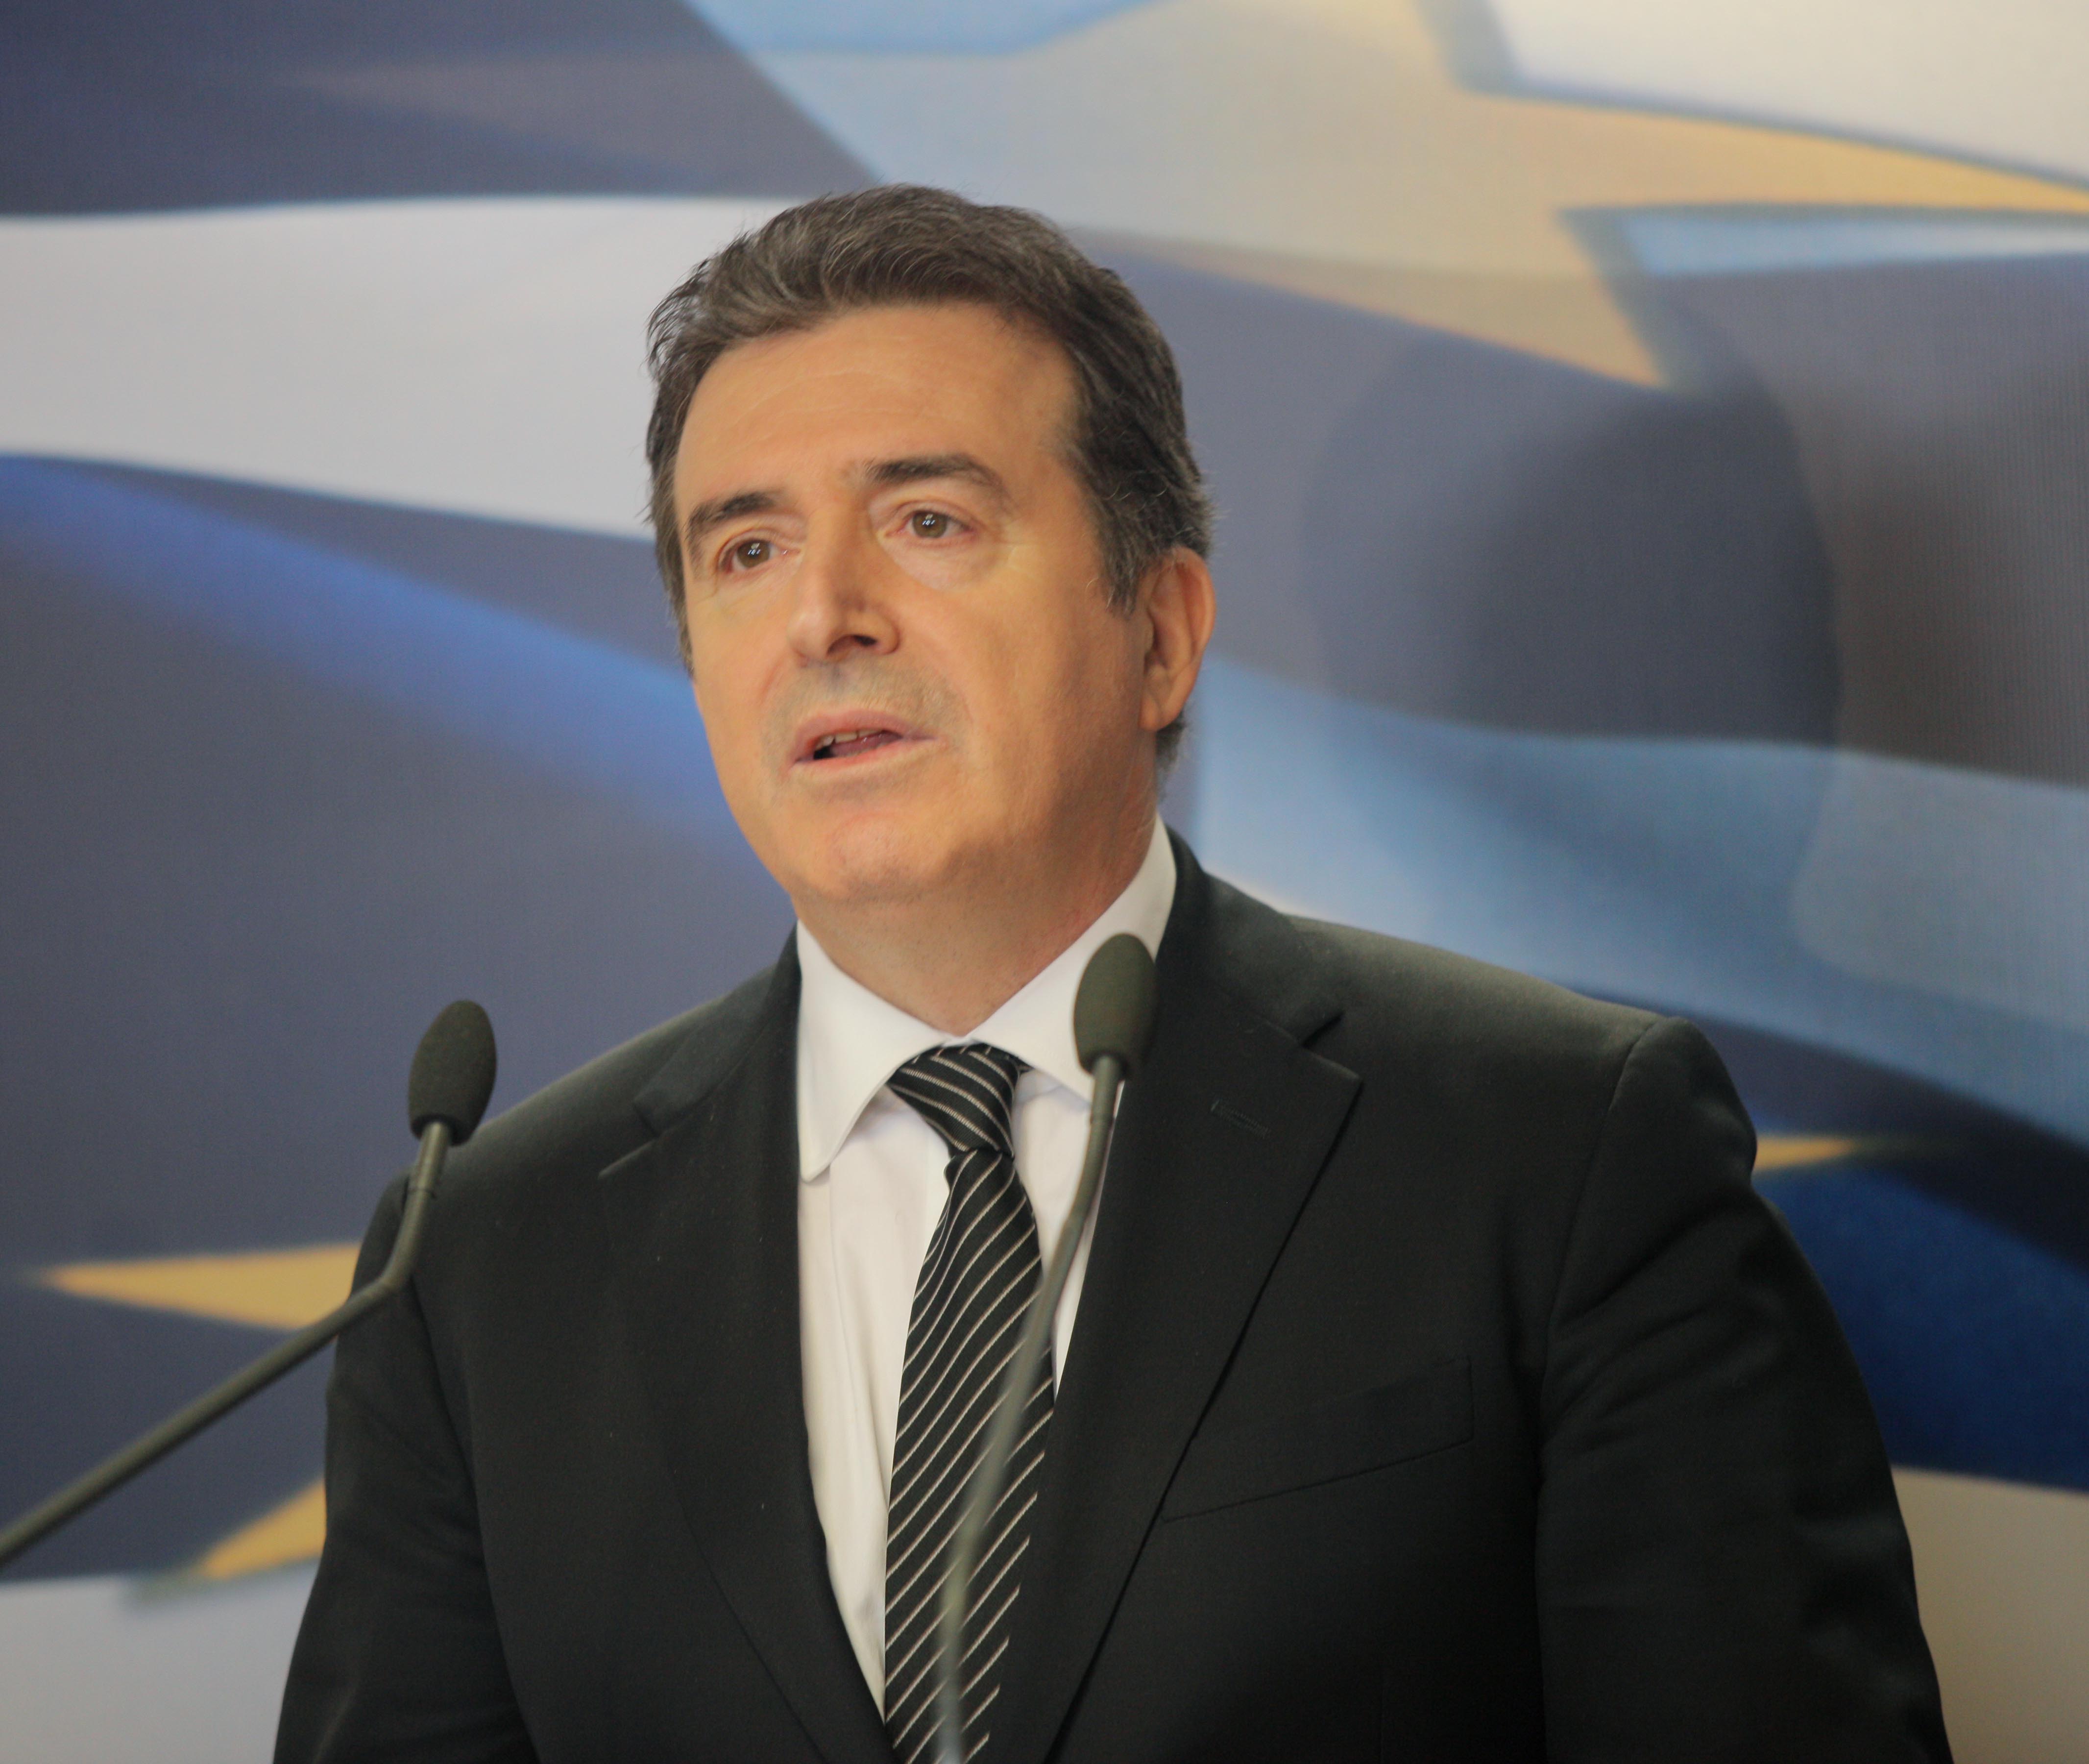 Yποψήφιος για την αρχηγία του ΠΑΣΟΚ θα είναι ο Μιχ. Χρυσοχοΐδης